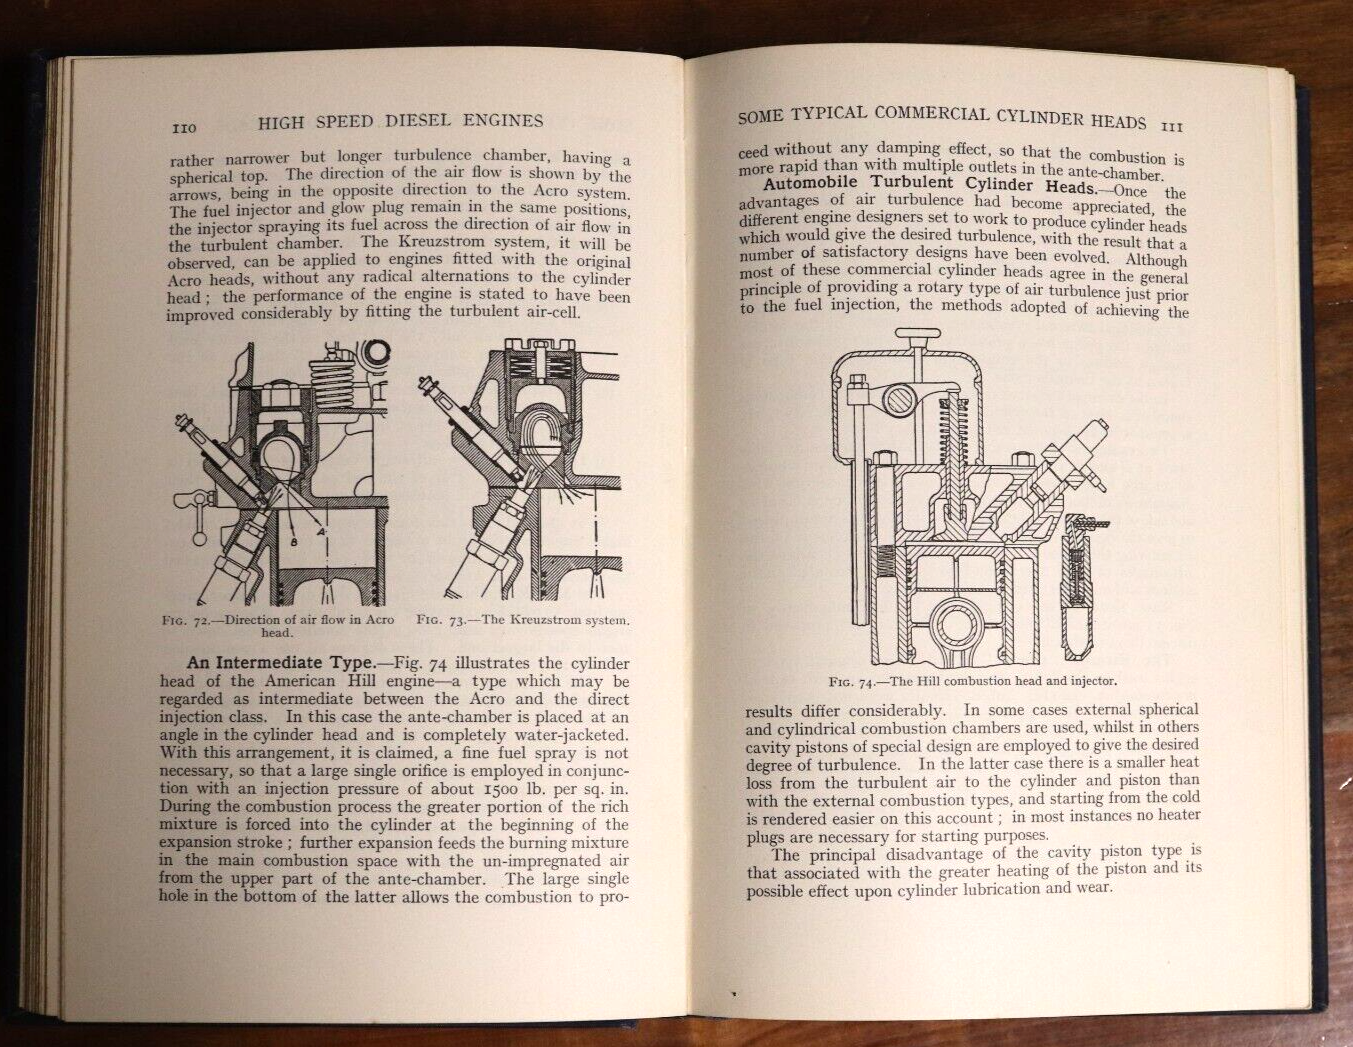 1938 High Speed Diesel Engines by AW Judge Antique Automotive Mechanics Book